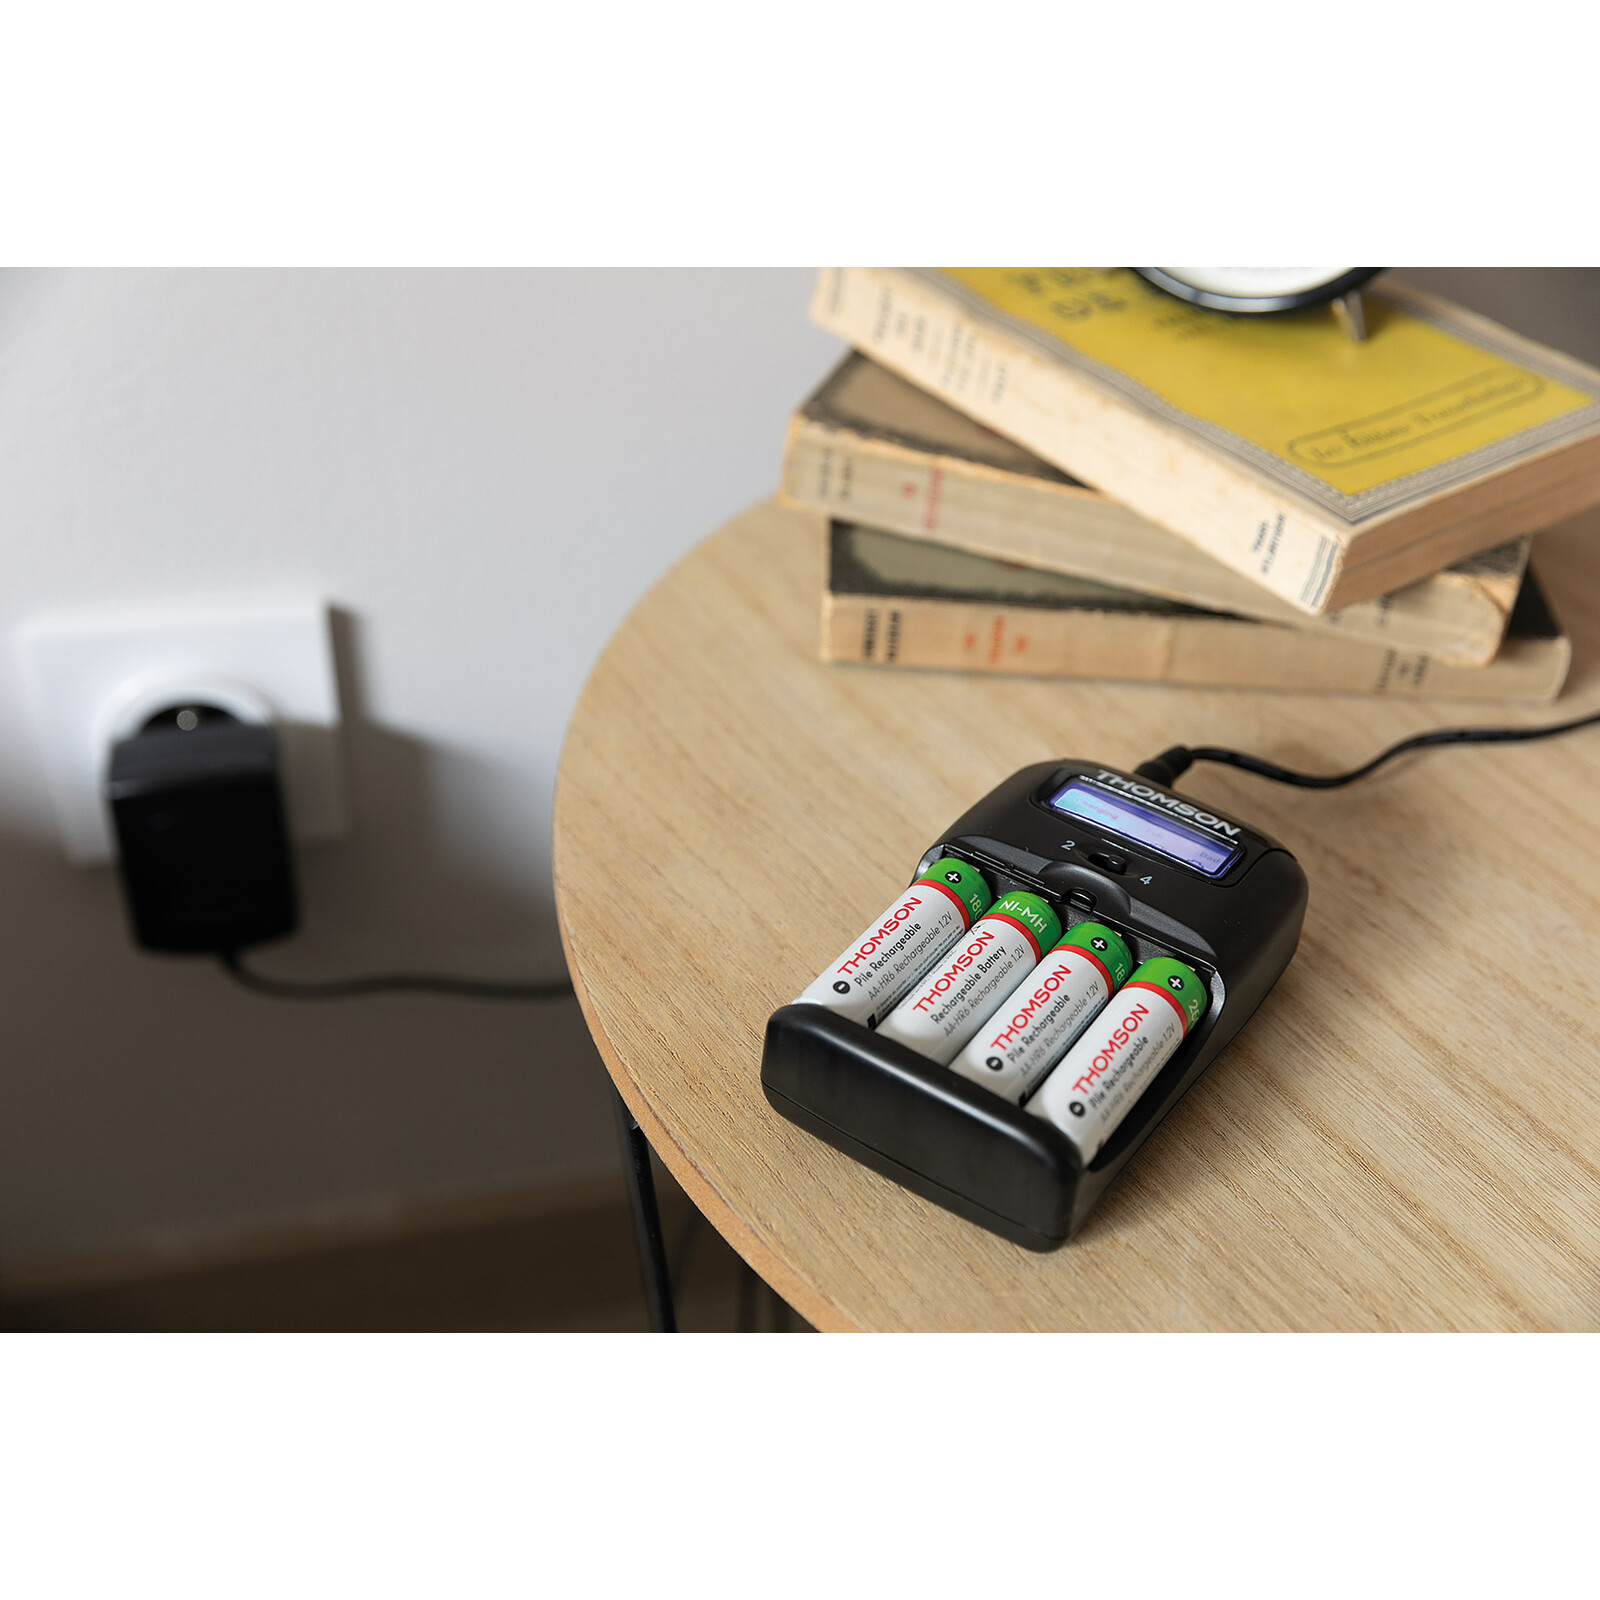 Energizer Chargeur de Piles Batteries AA - AAA // +2 Piles